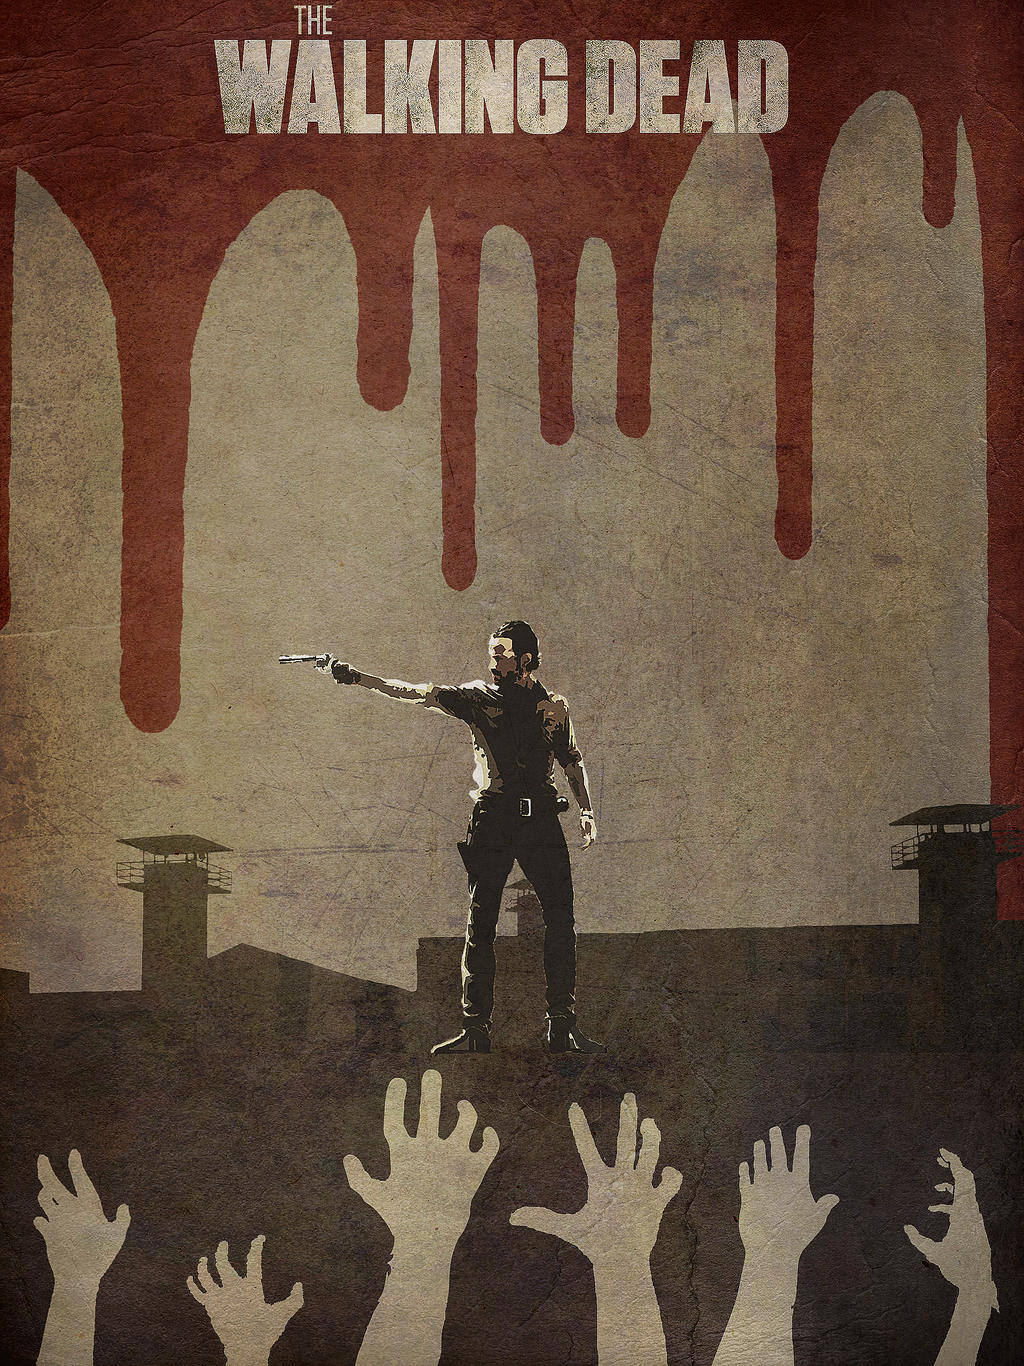 Dead posters. The Walking Dead Постер. Ходячие мертвецы арт Постер. Ходячие мертвецы руки Постер.